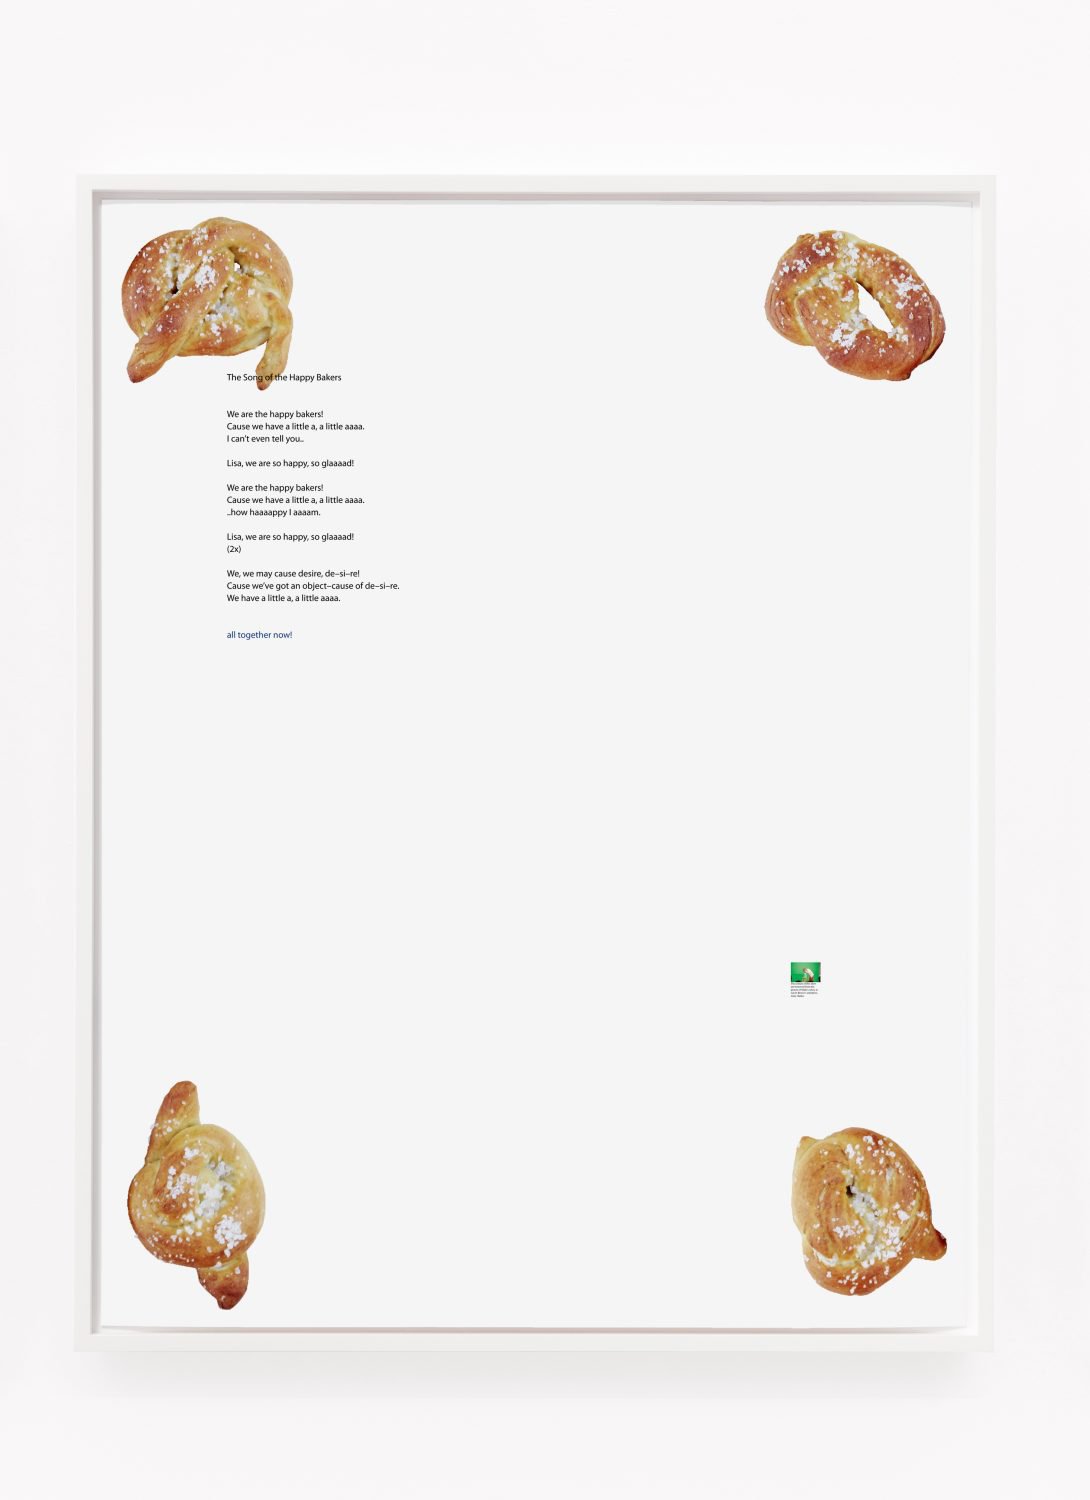 Lisa HolzerThe Song of the Happy Bakers (Illustrierte Version 1), 2011Pigment print on cotton paper52.5 x 70 cm